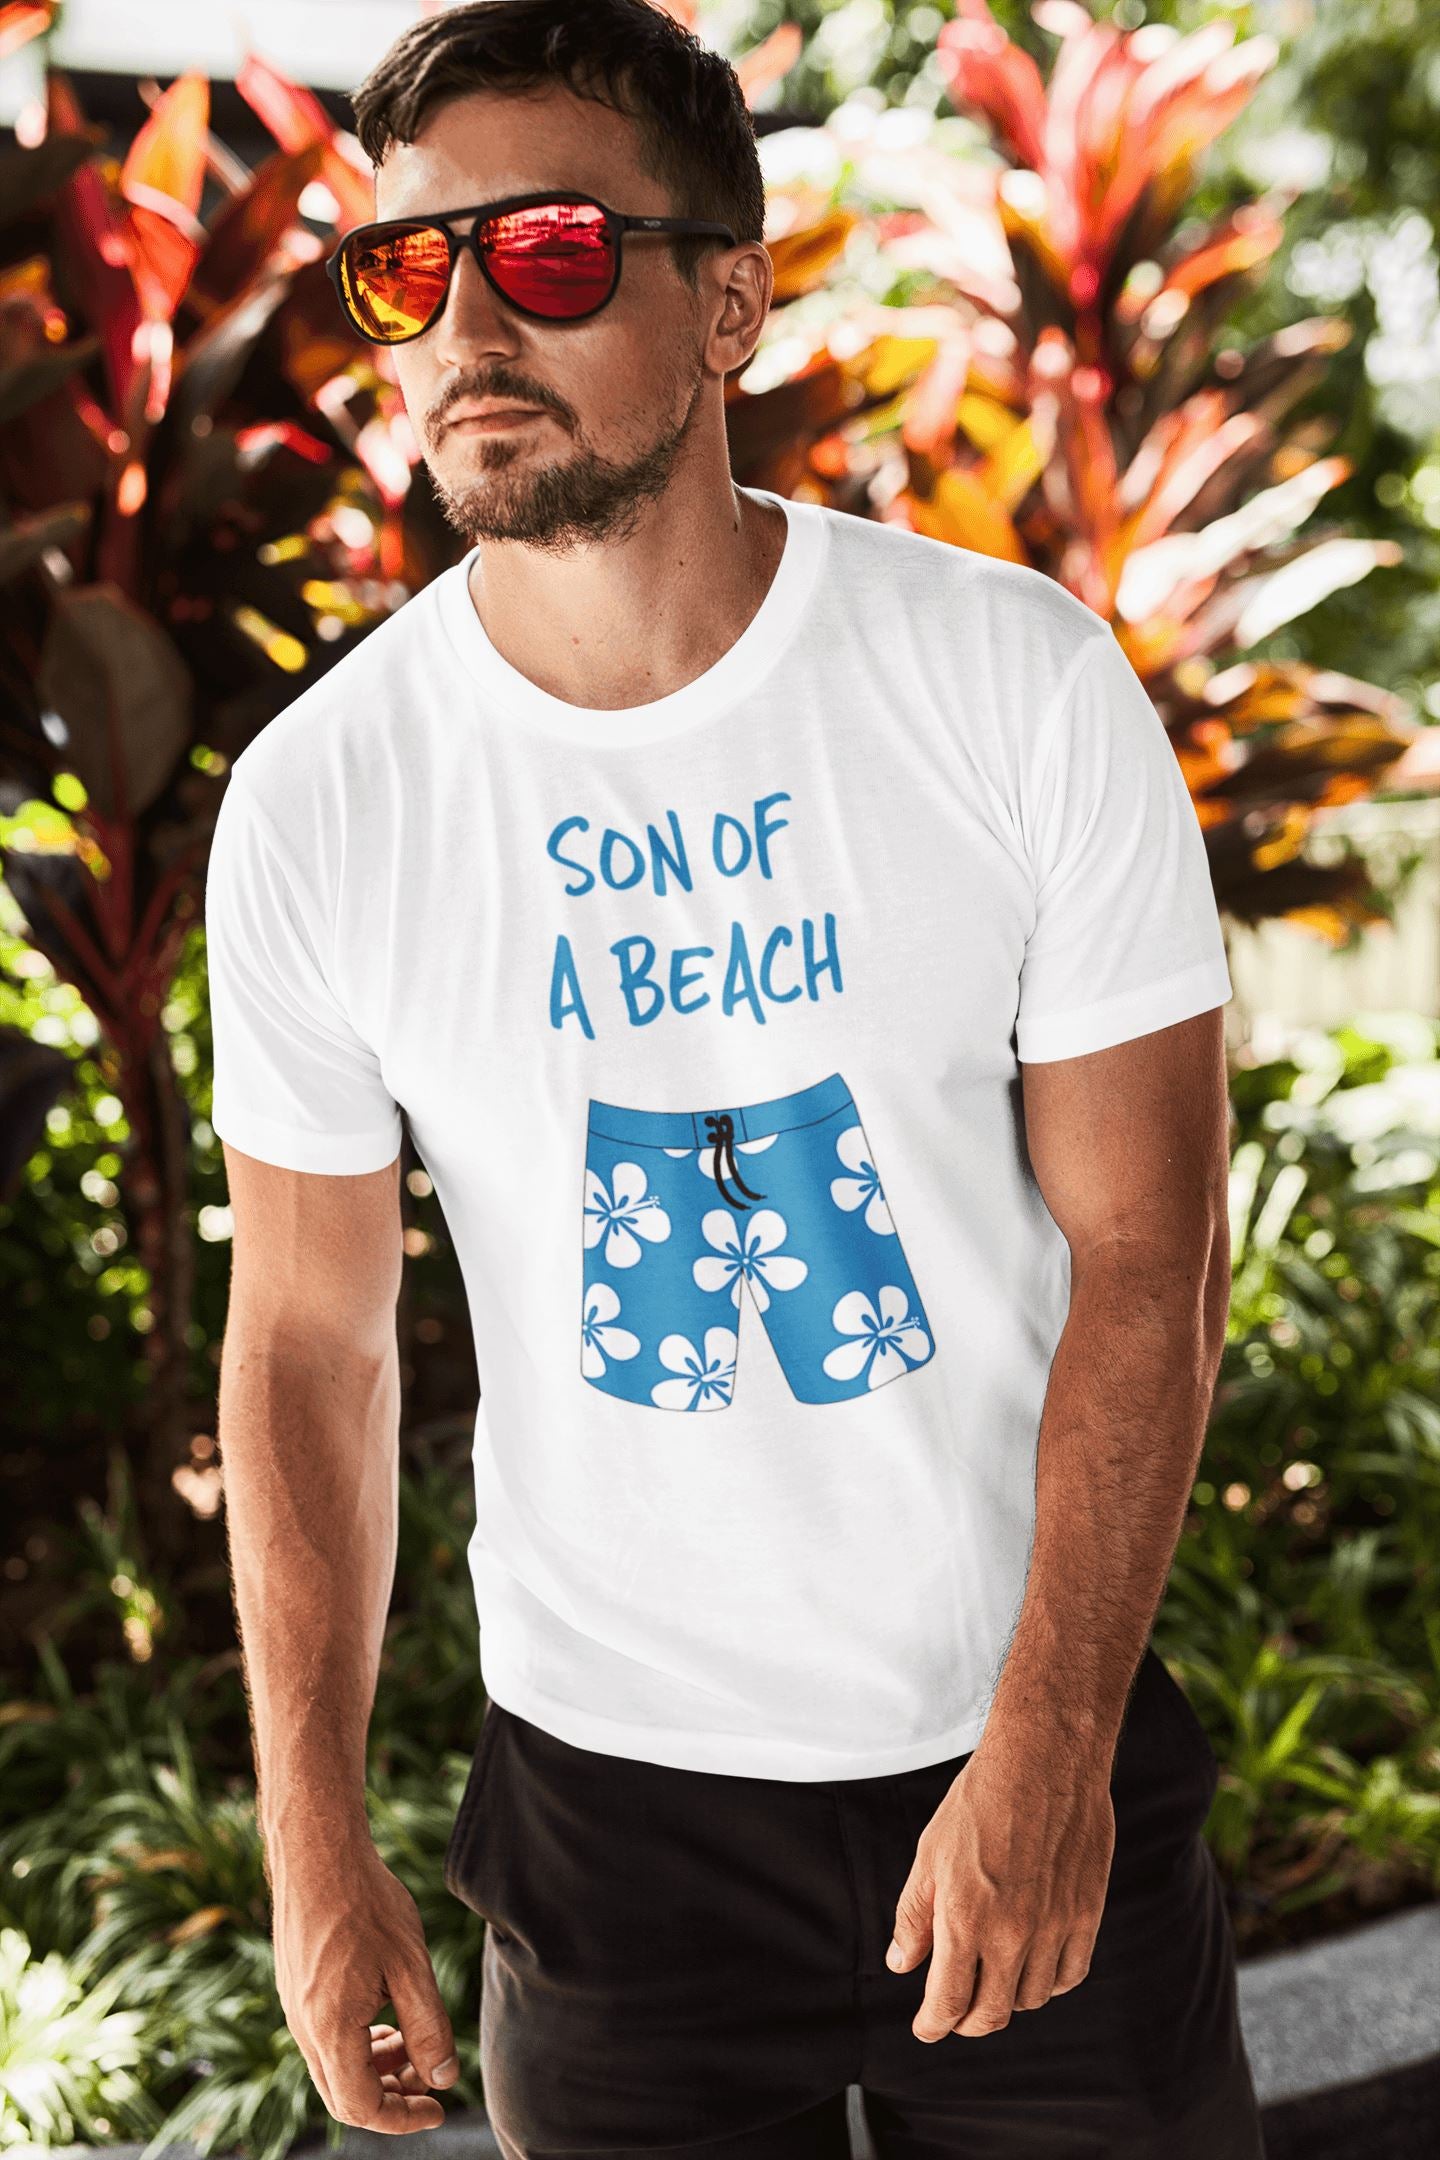 Son of a Beach Funny White T Shirt for Men | Beachwear - Catch My Drift India  beachwear, clothing, funny, general, made in india, shirt, t shirt, trending, tshirt, white